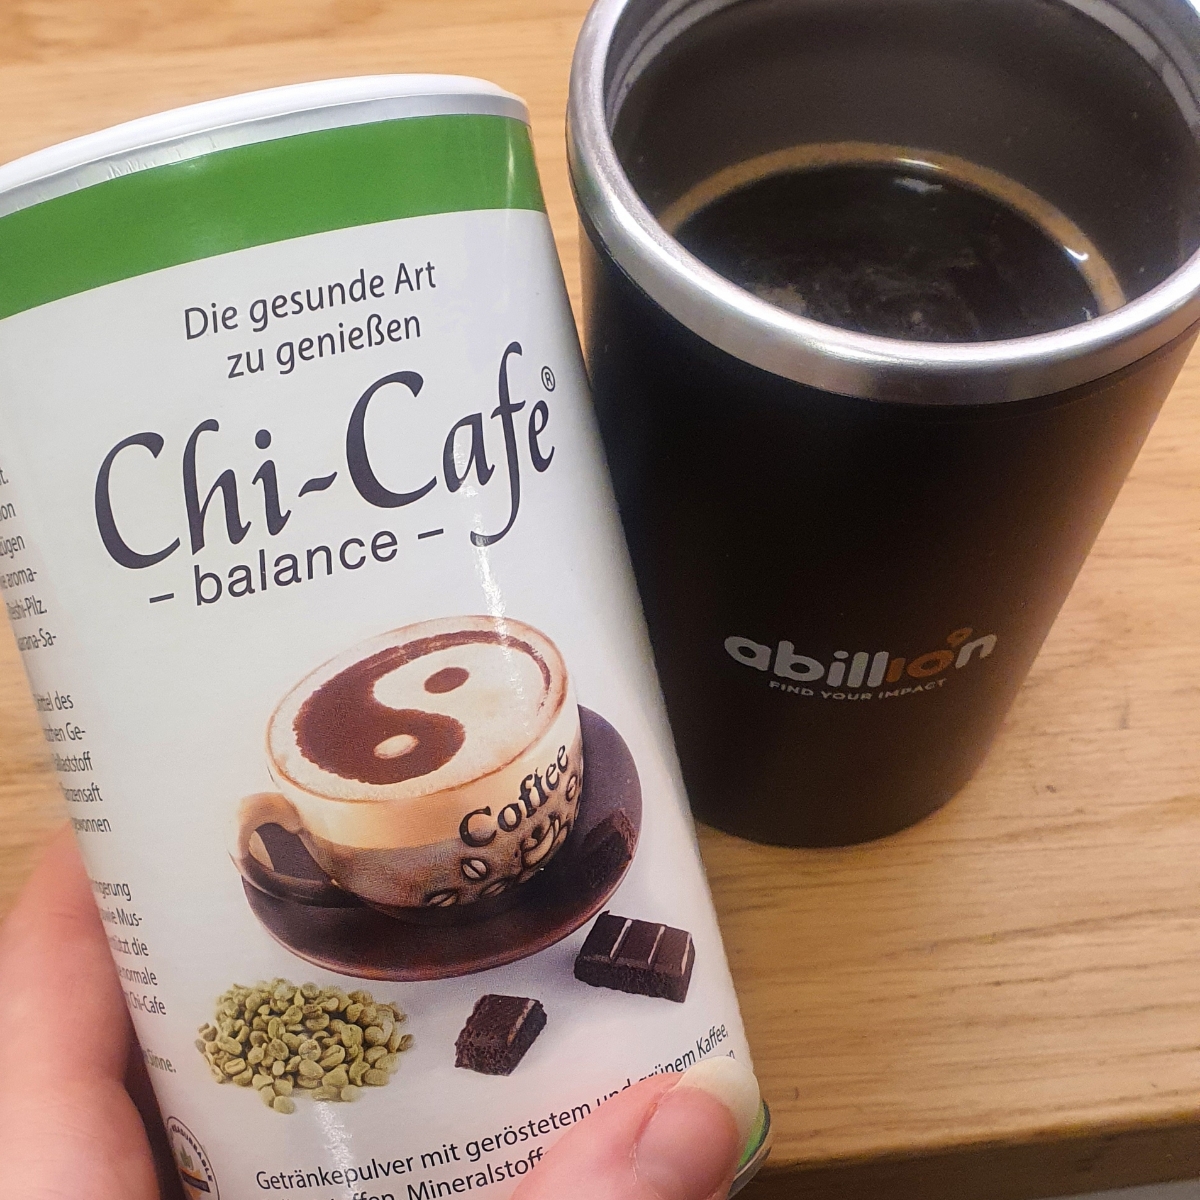 Chi-Cafe Chi Cafe balance Reviews